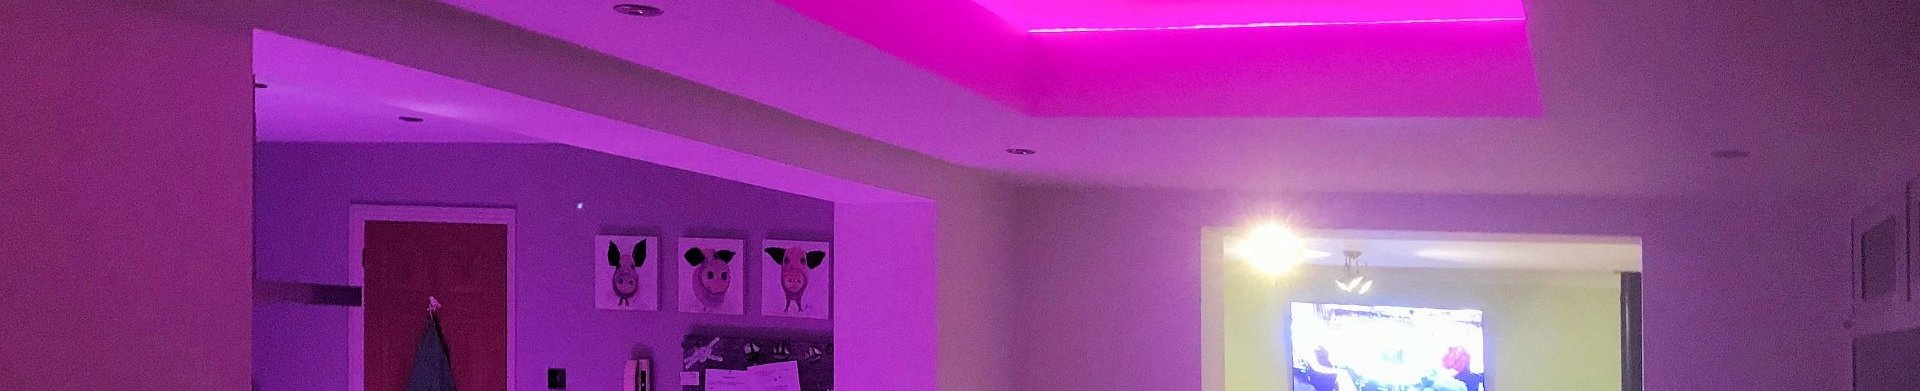 Ambient mood interior room led lighting system for North Devon first floor summer room